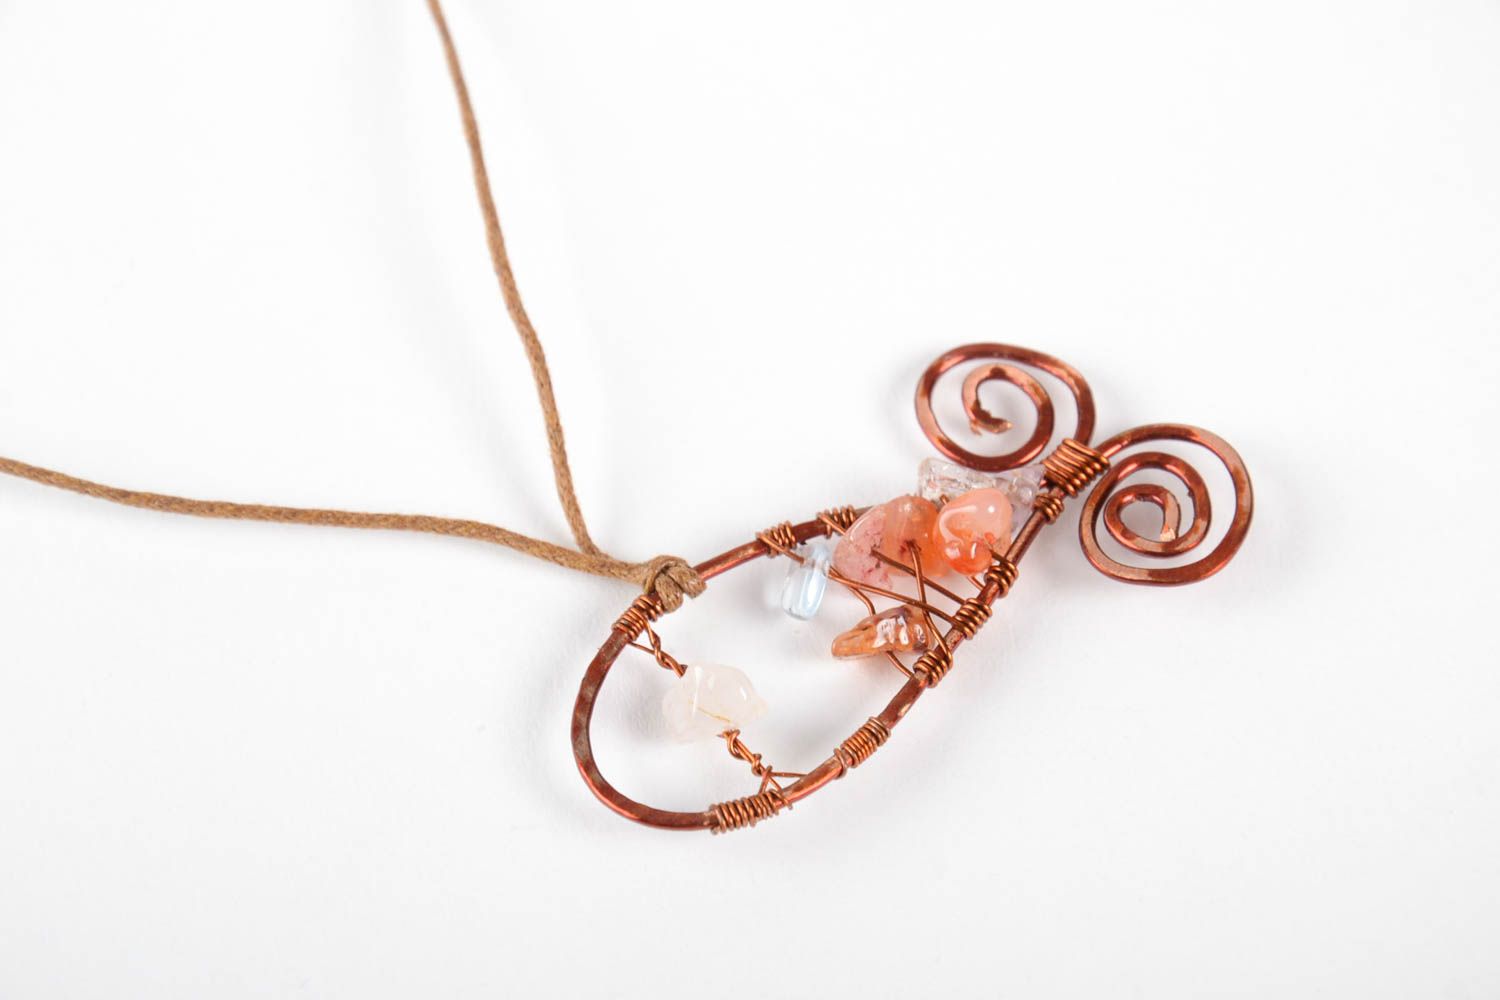 Handmade pendant unusual pendant designer accessory copper pendant gift ideas photo 3